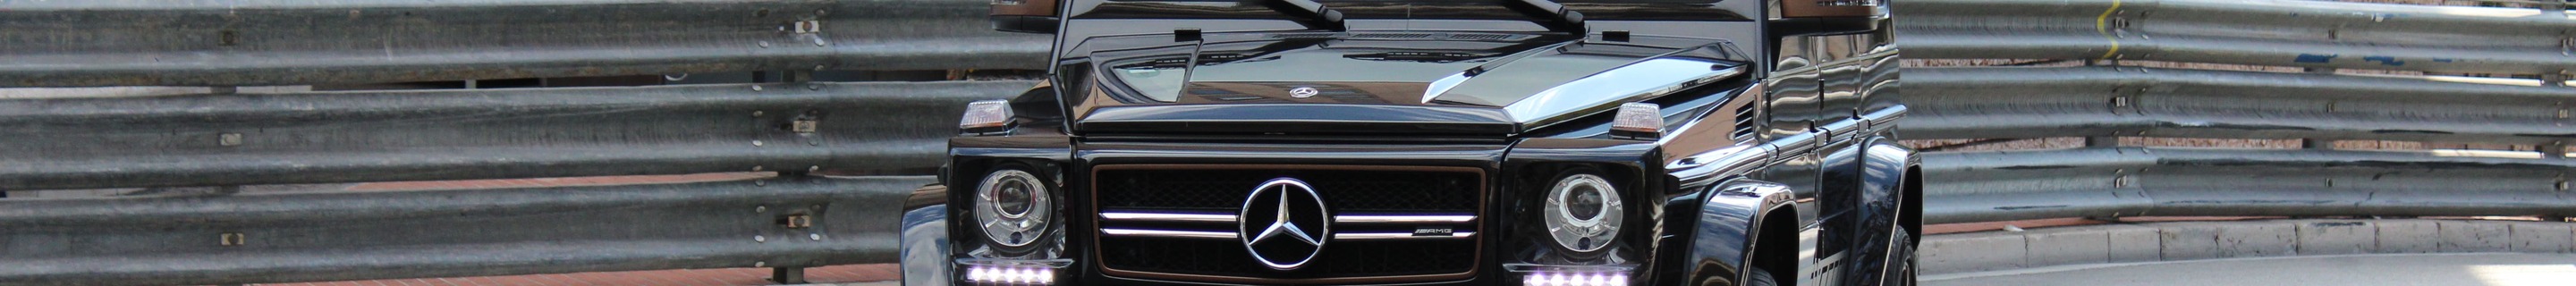 Mercedes-AMG G 65 2016 Final Edition